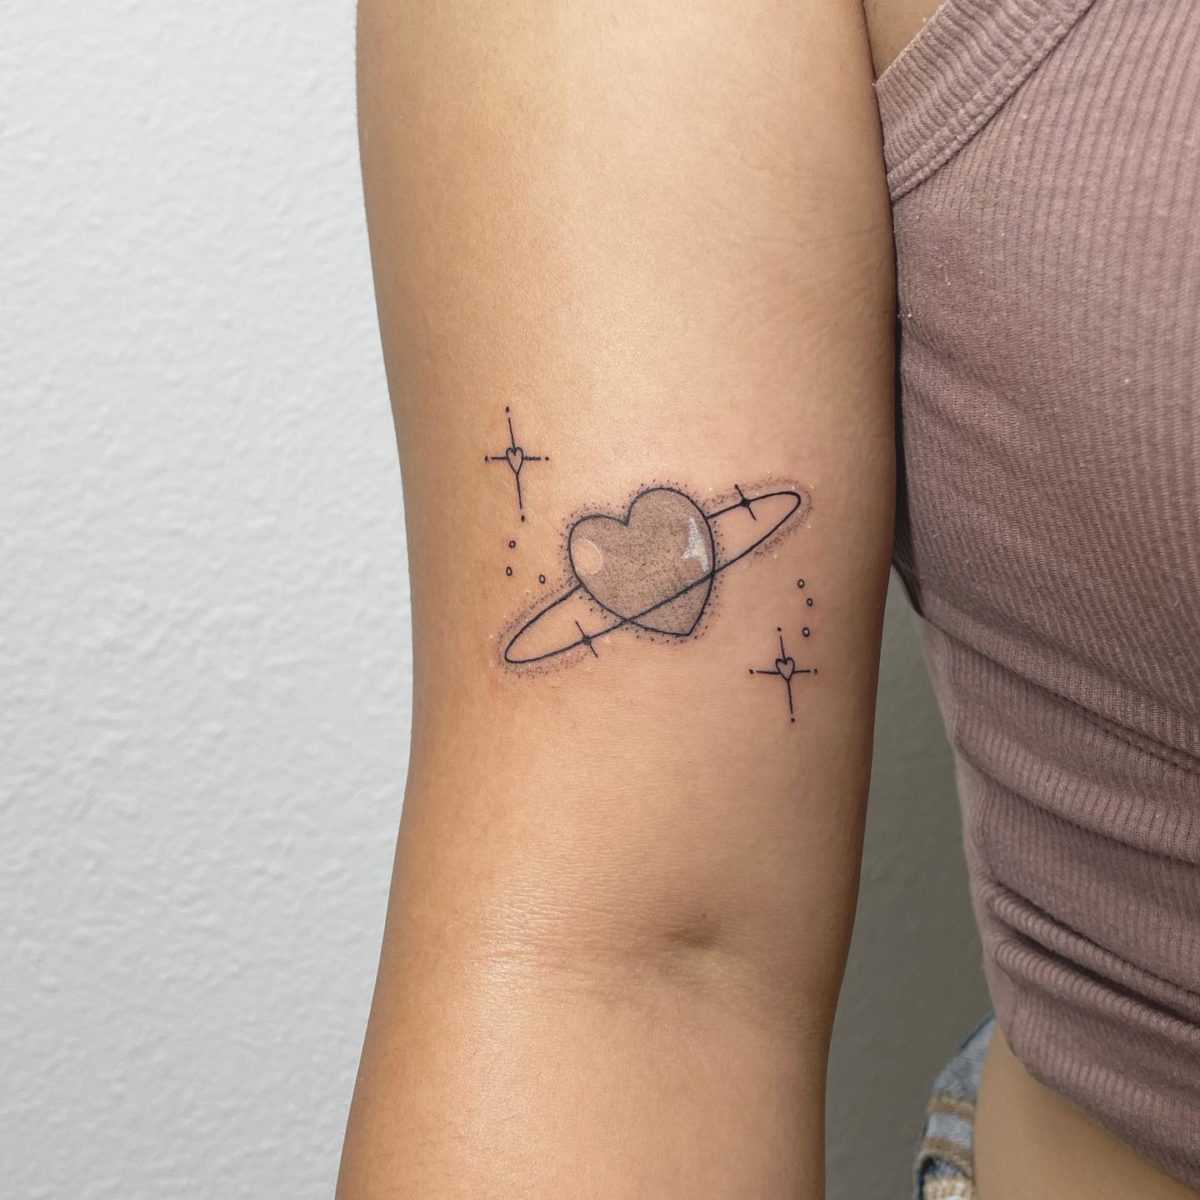 Star Tattoos and Ideas